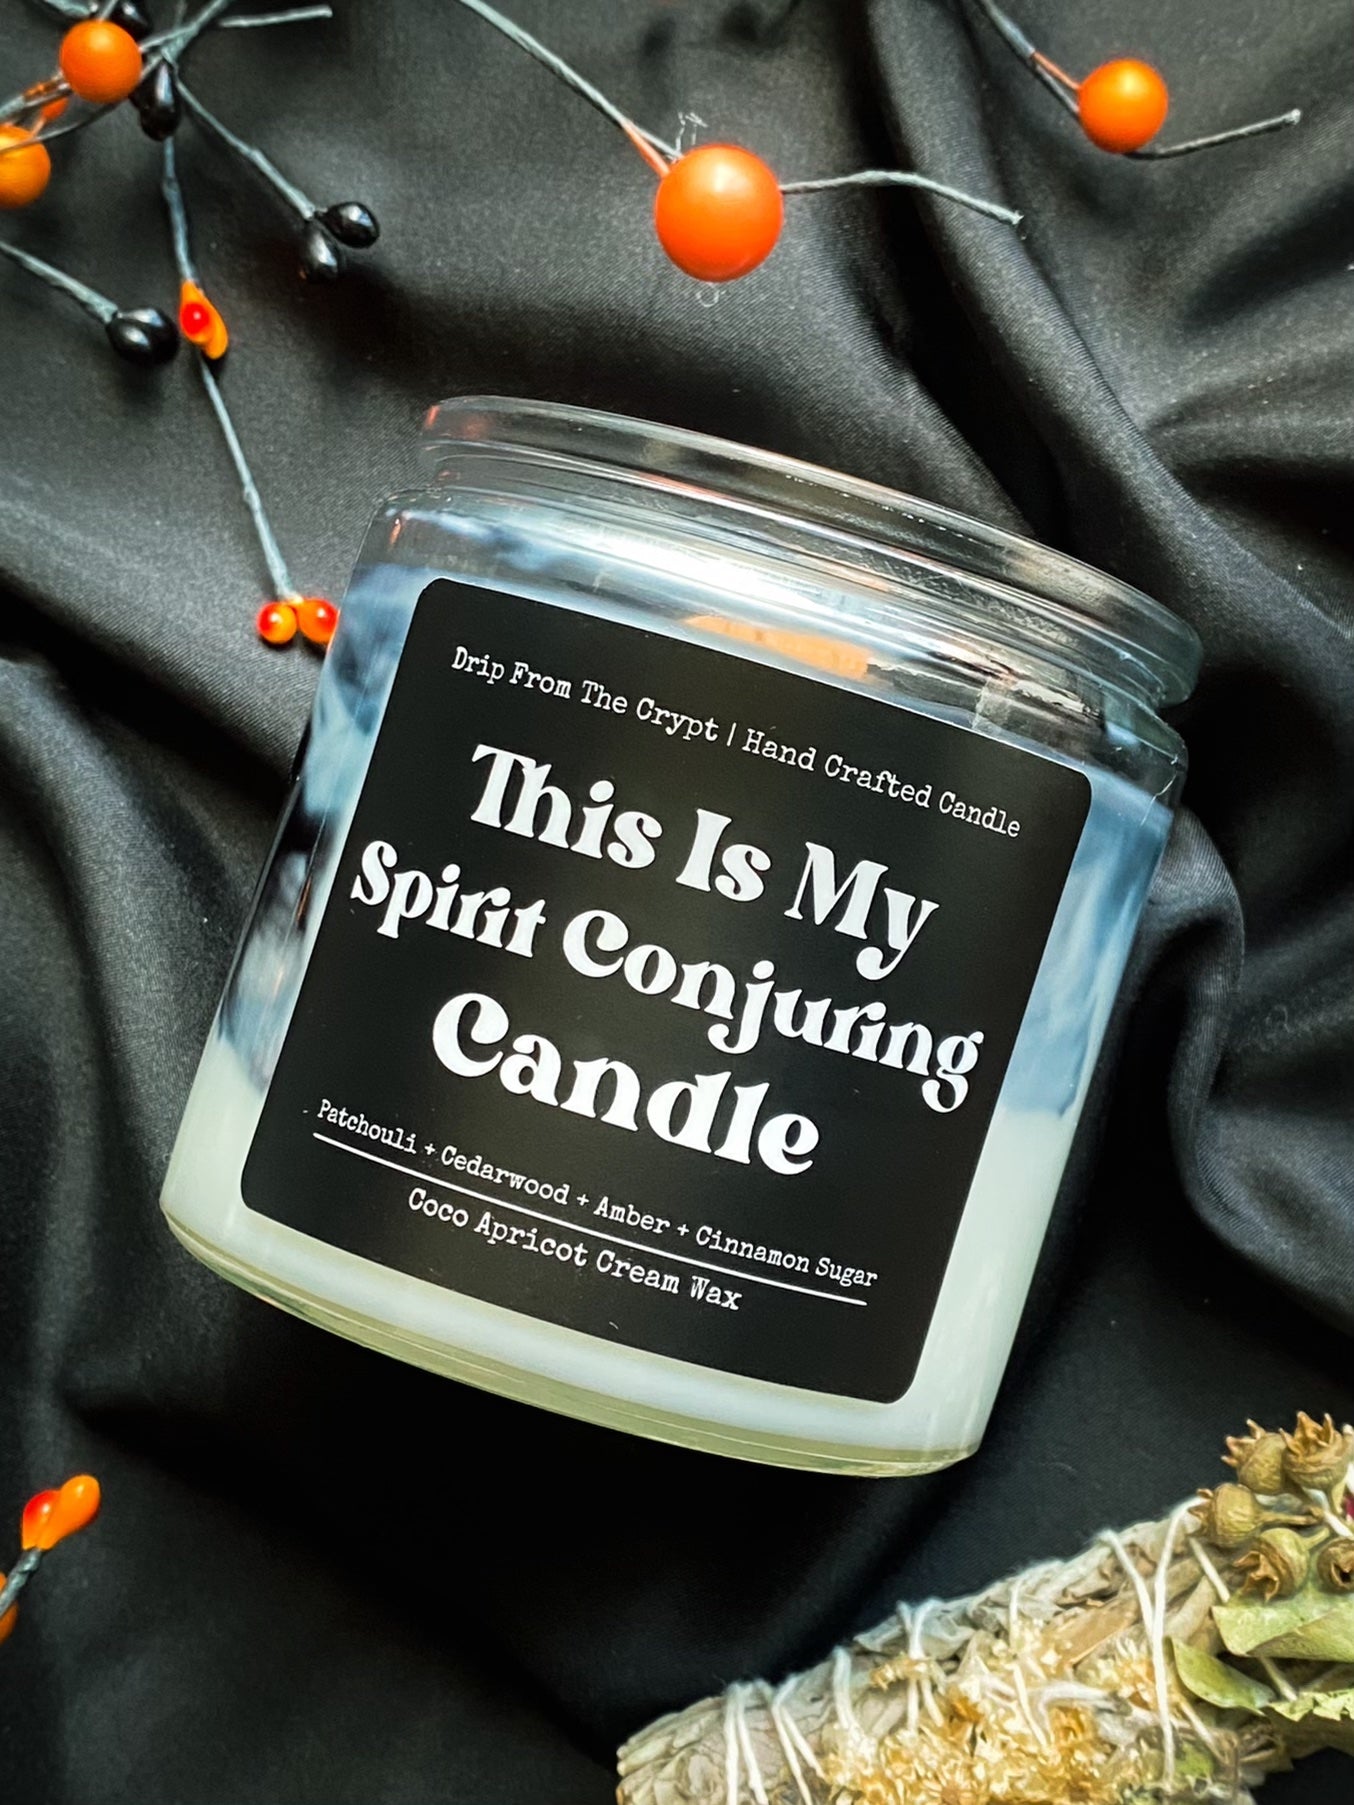 Spirit Conjuring Candle